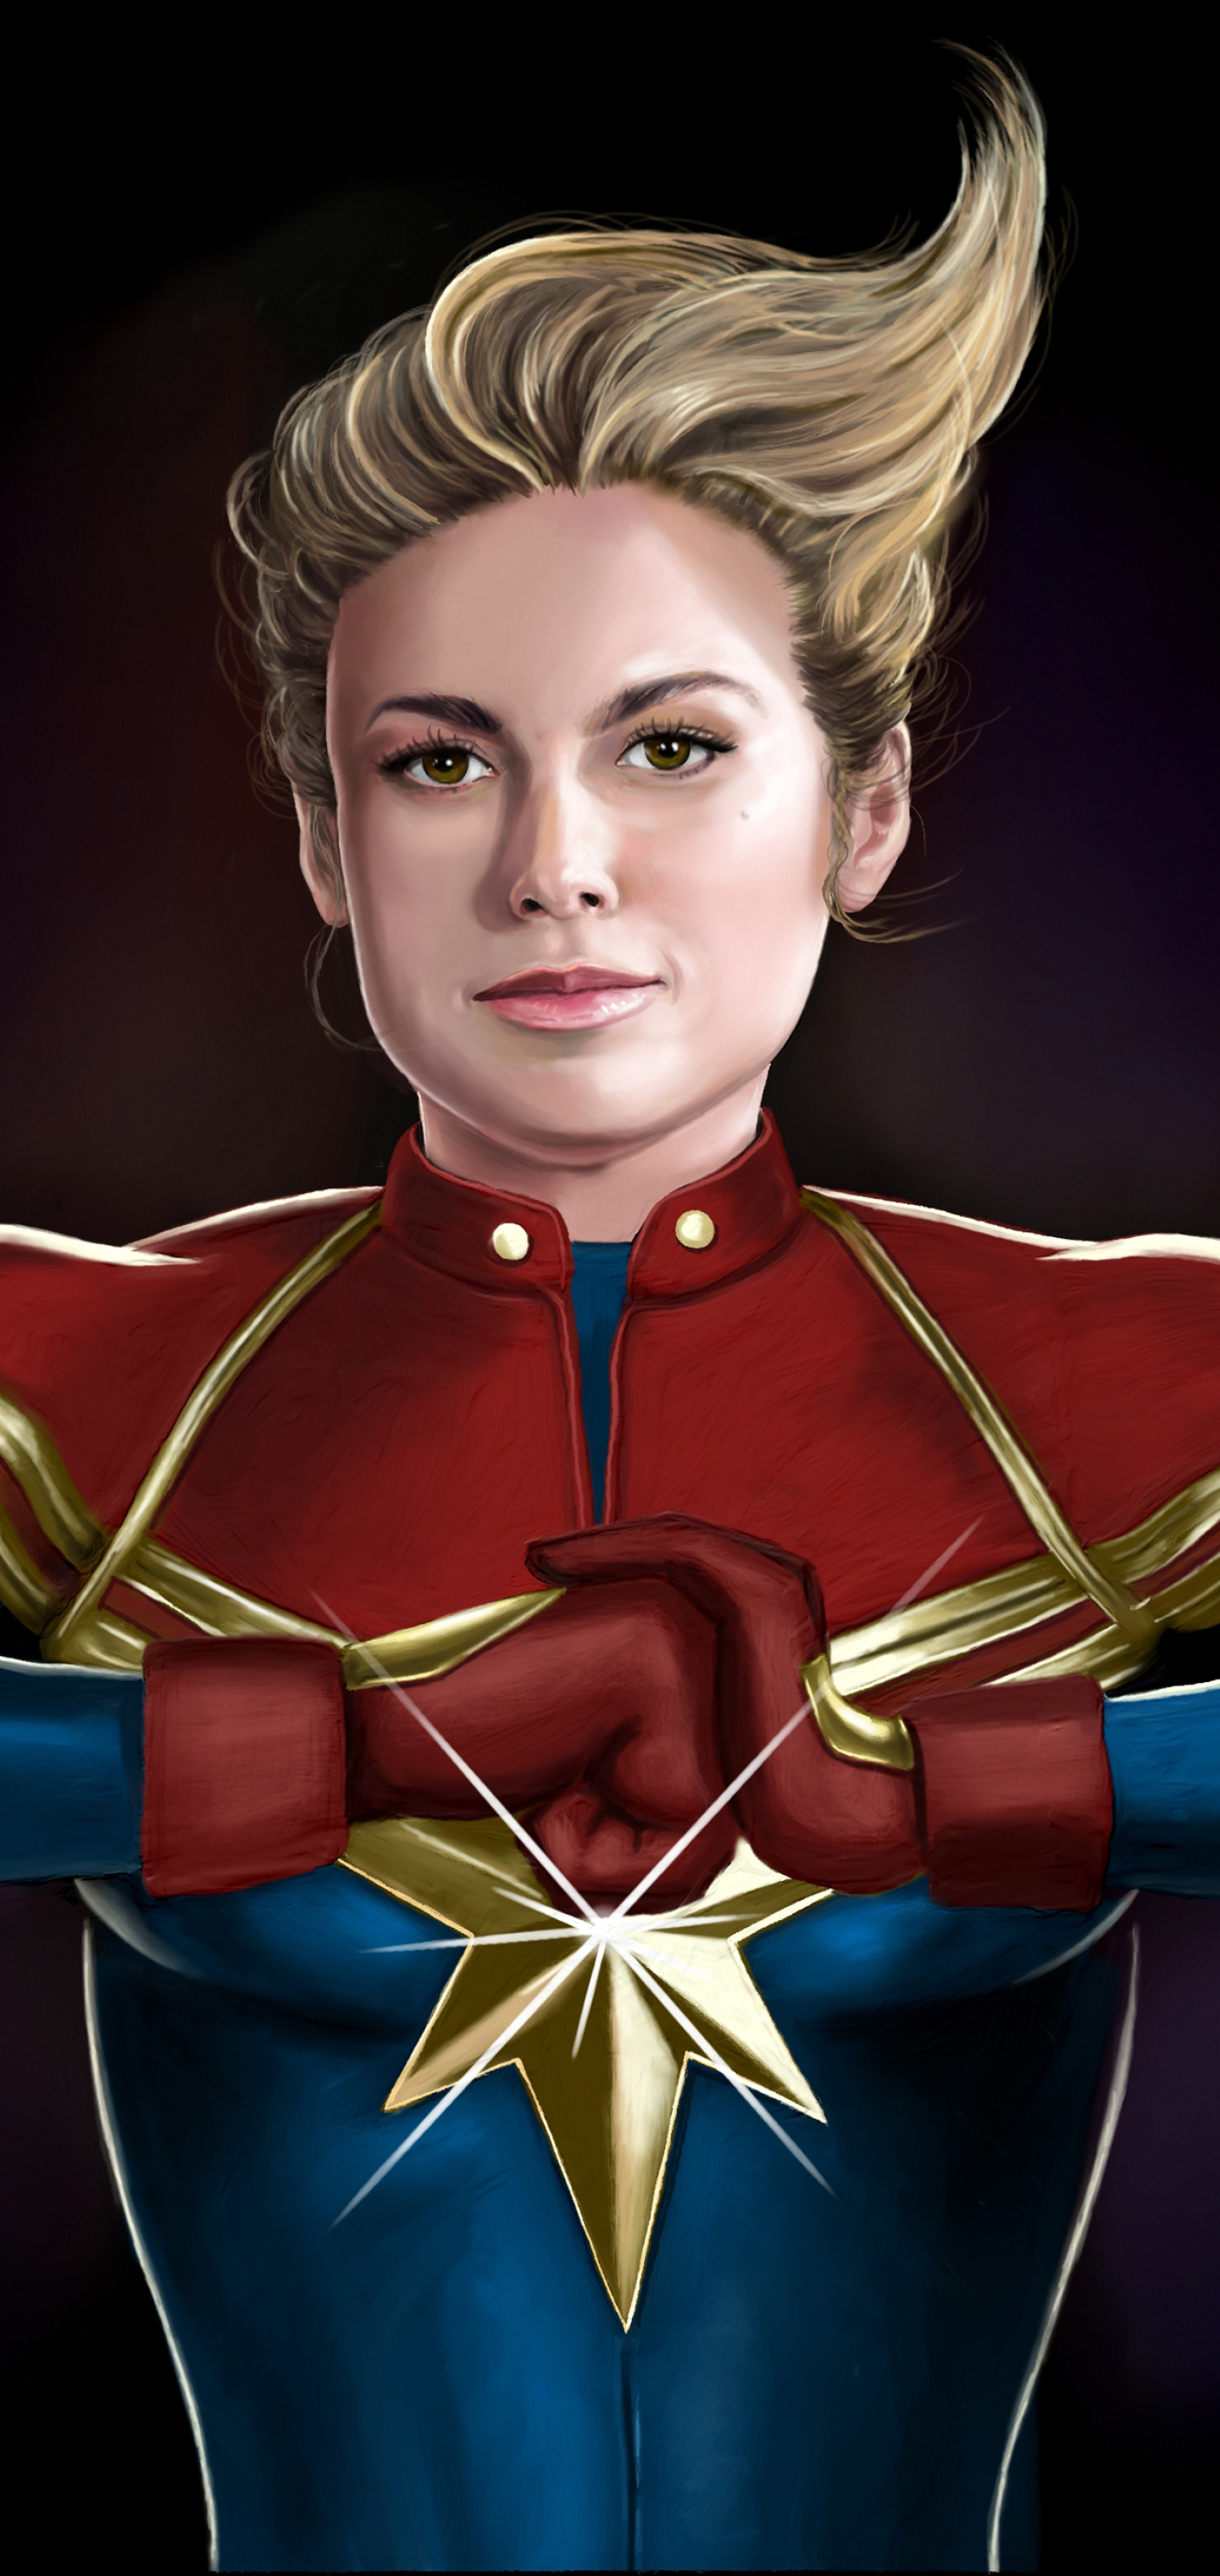 Brie Larson Captain Marvel Concept Art Images and Photos finder